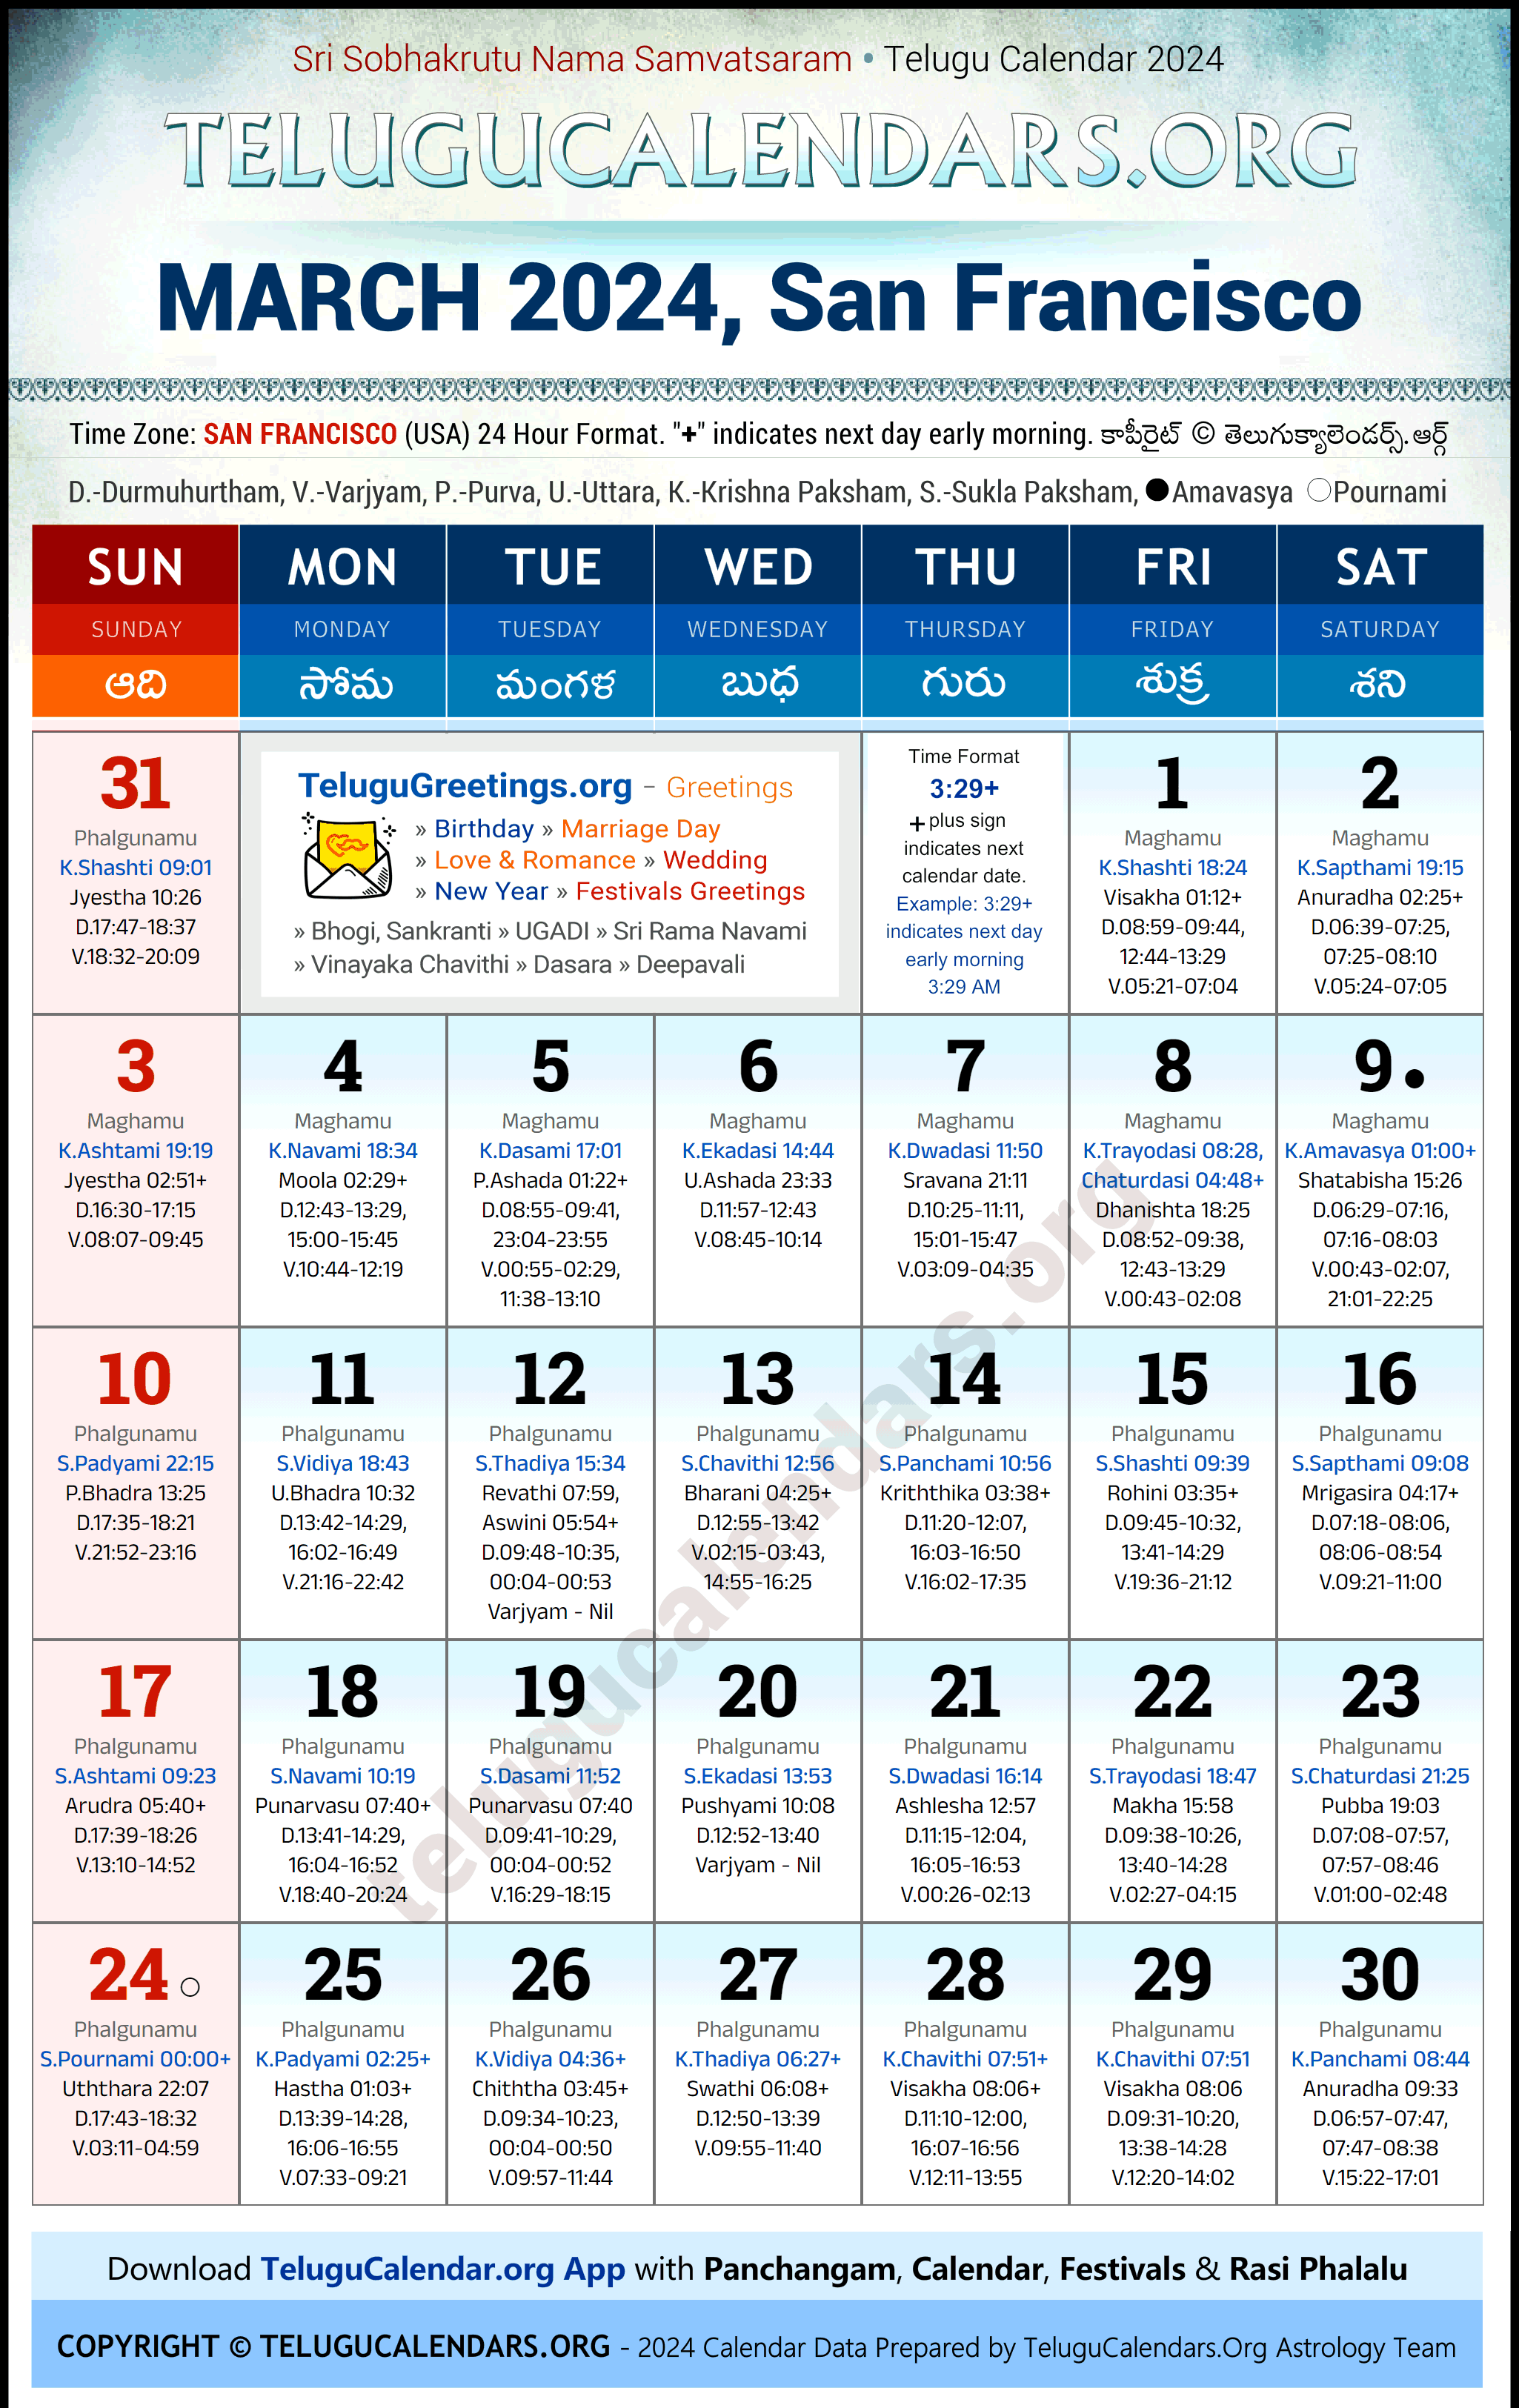 Telugu Calendar 2024 March Festivals for San Francisco